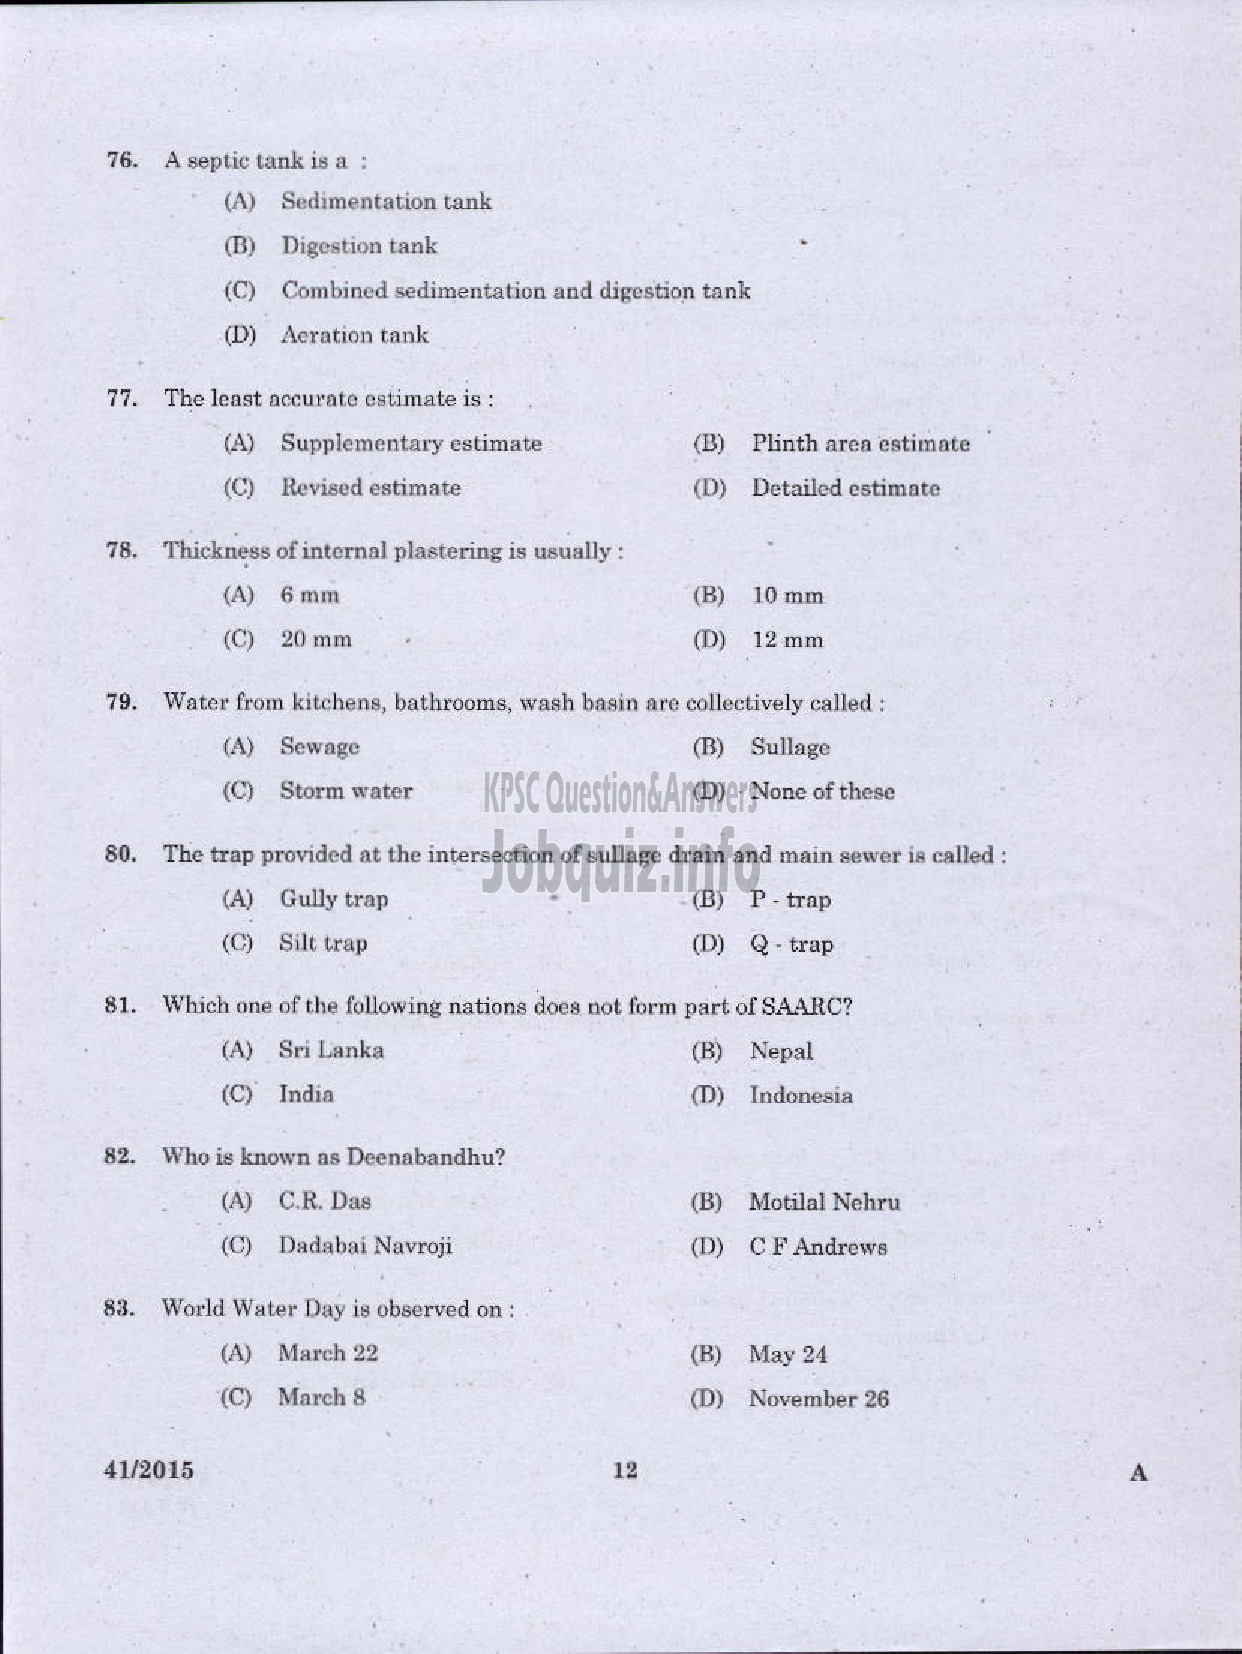 Kerala PSC Question Paper - LABORATORY TECHNICAL ASSISTANT CIVIL CONSTRUCTION AND MAINTENANCE VOCATIONAL HIGHER SECONDARY EDUCATION-10